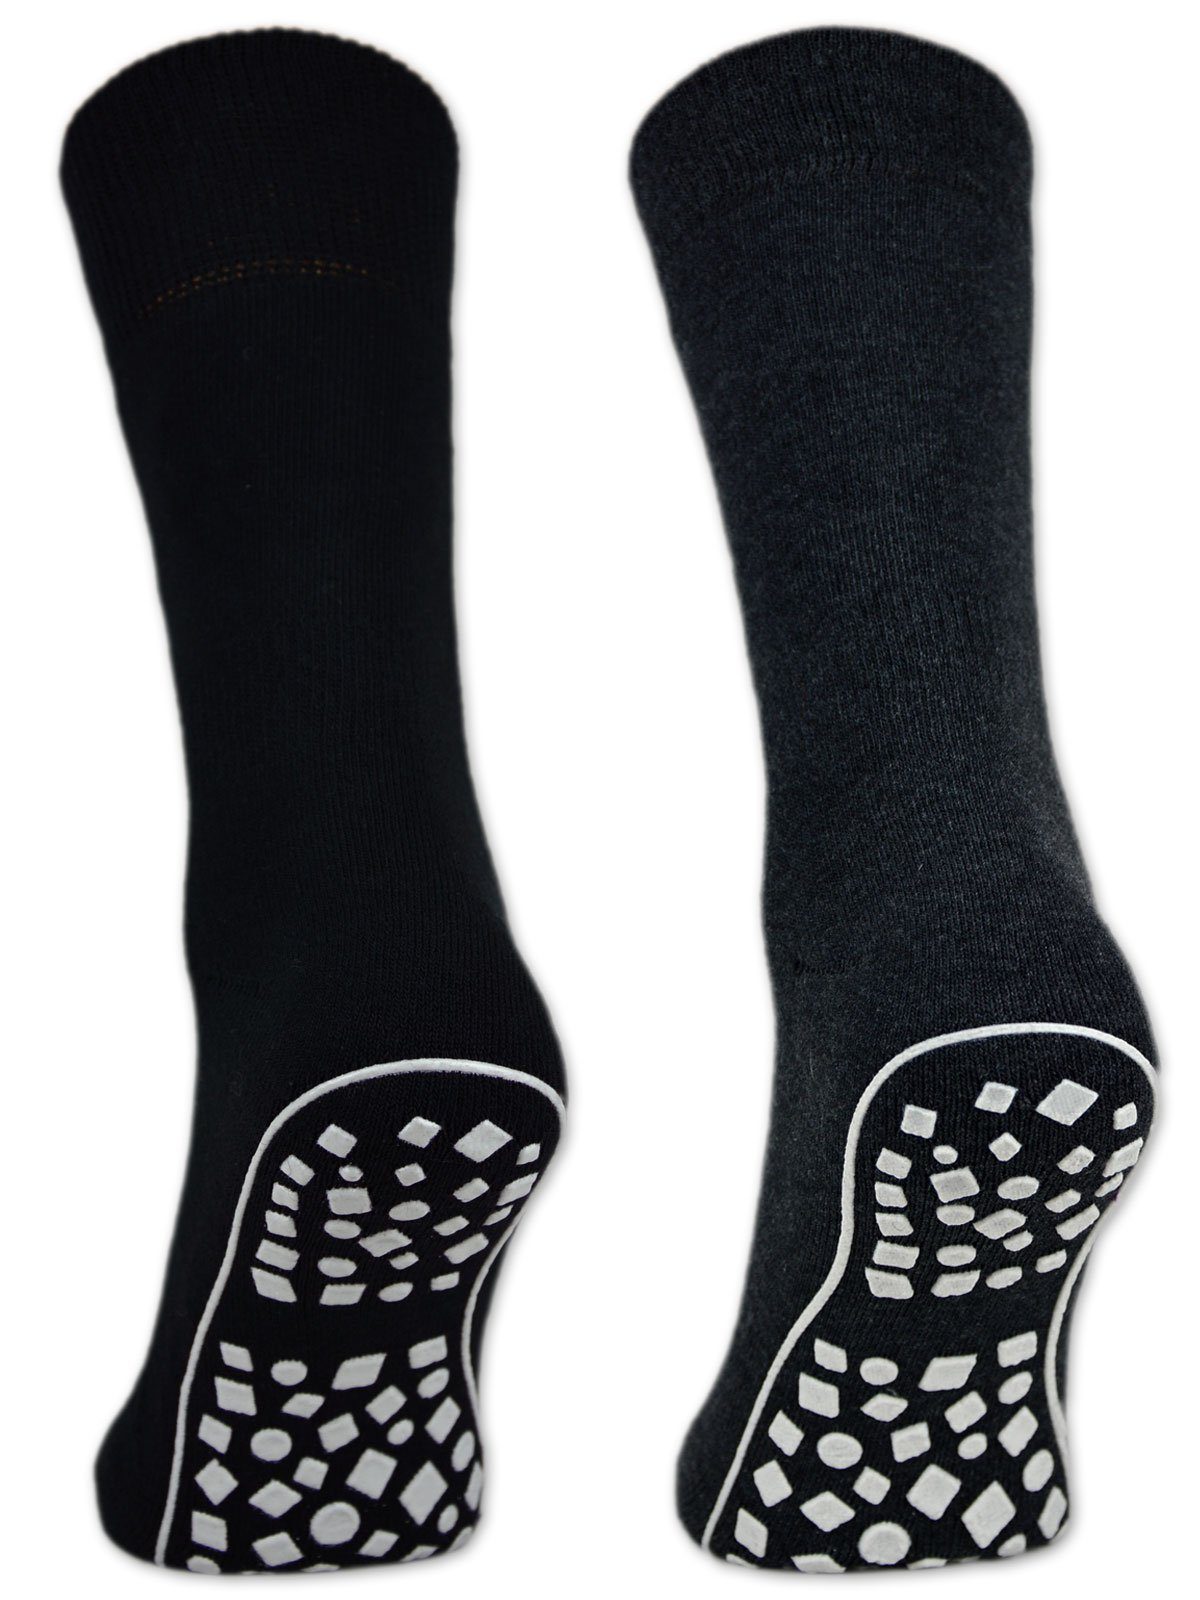 sockenkauf24 ABS-Socken »2, 4, 6 Paar Damen & Herren Anti Rutsch Socken  Baumwolle« (Schwarz, Blau, Grau, 2-Paar, 35-38) Stoppersocken Noppensocken  - 21395 online kaufen | OTTO